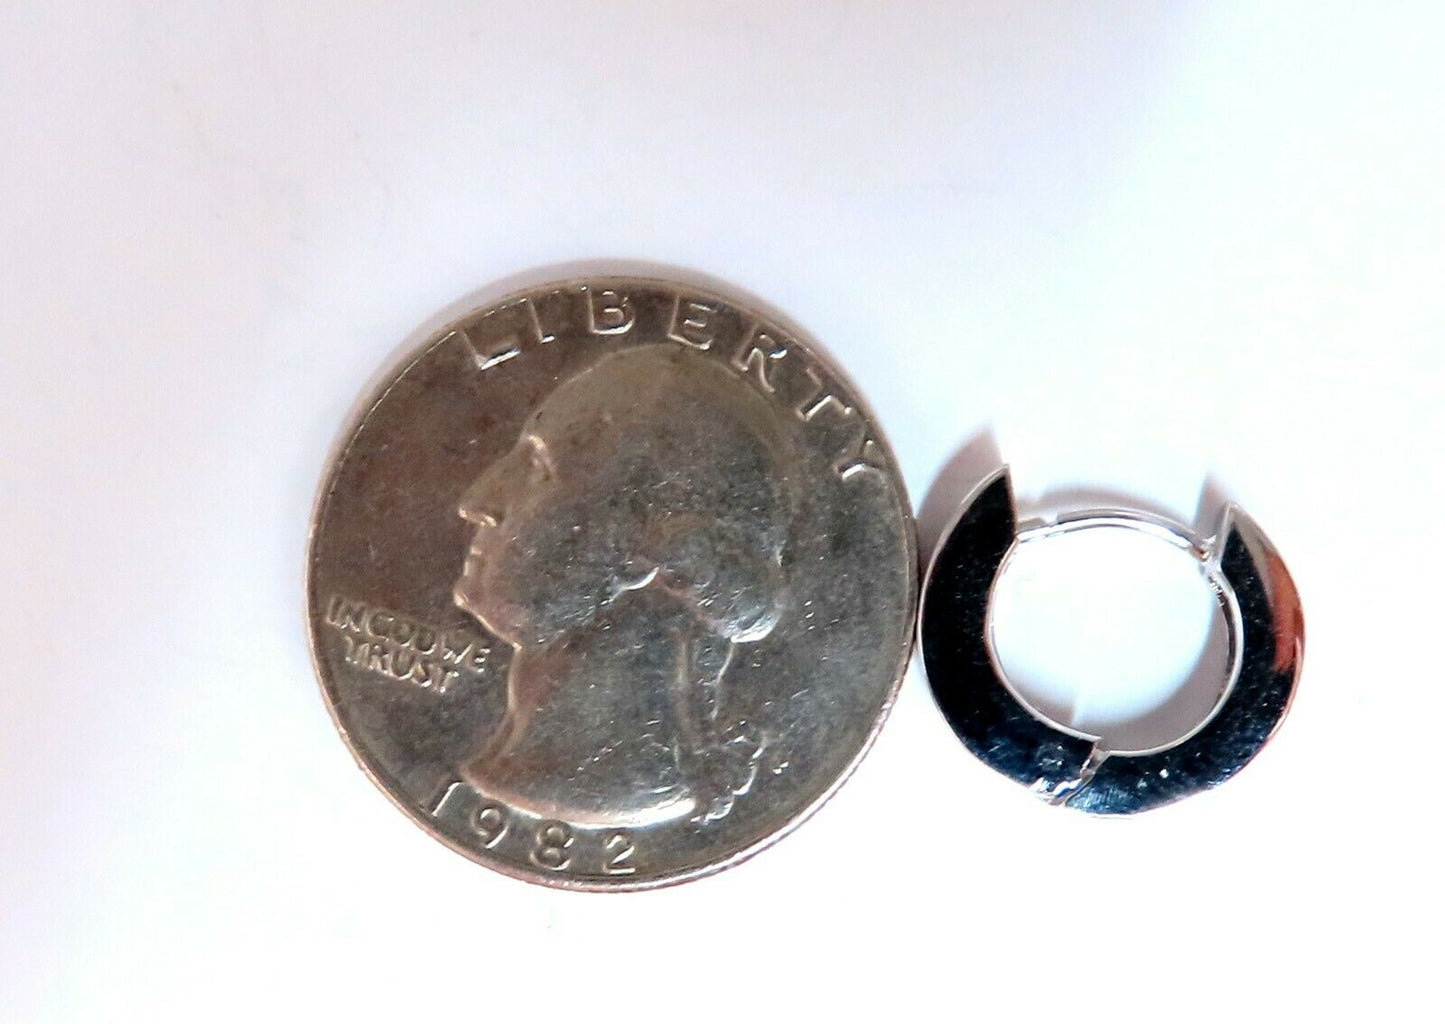 .40ct Natural Baguette Diamond mini hoop earring 14kt 14mm